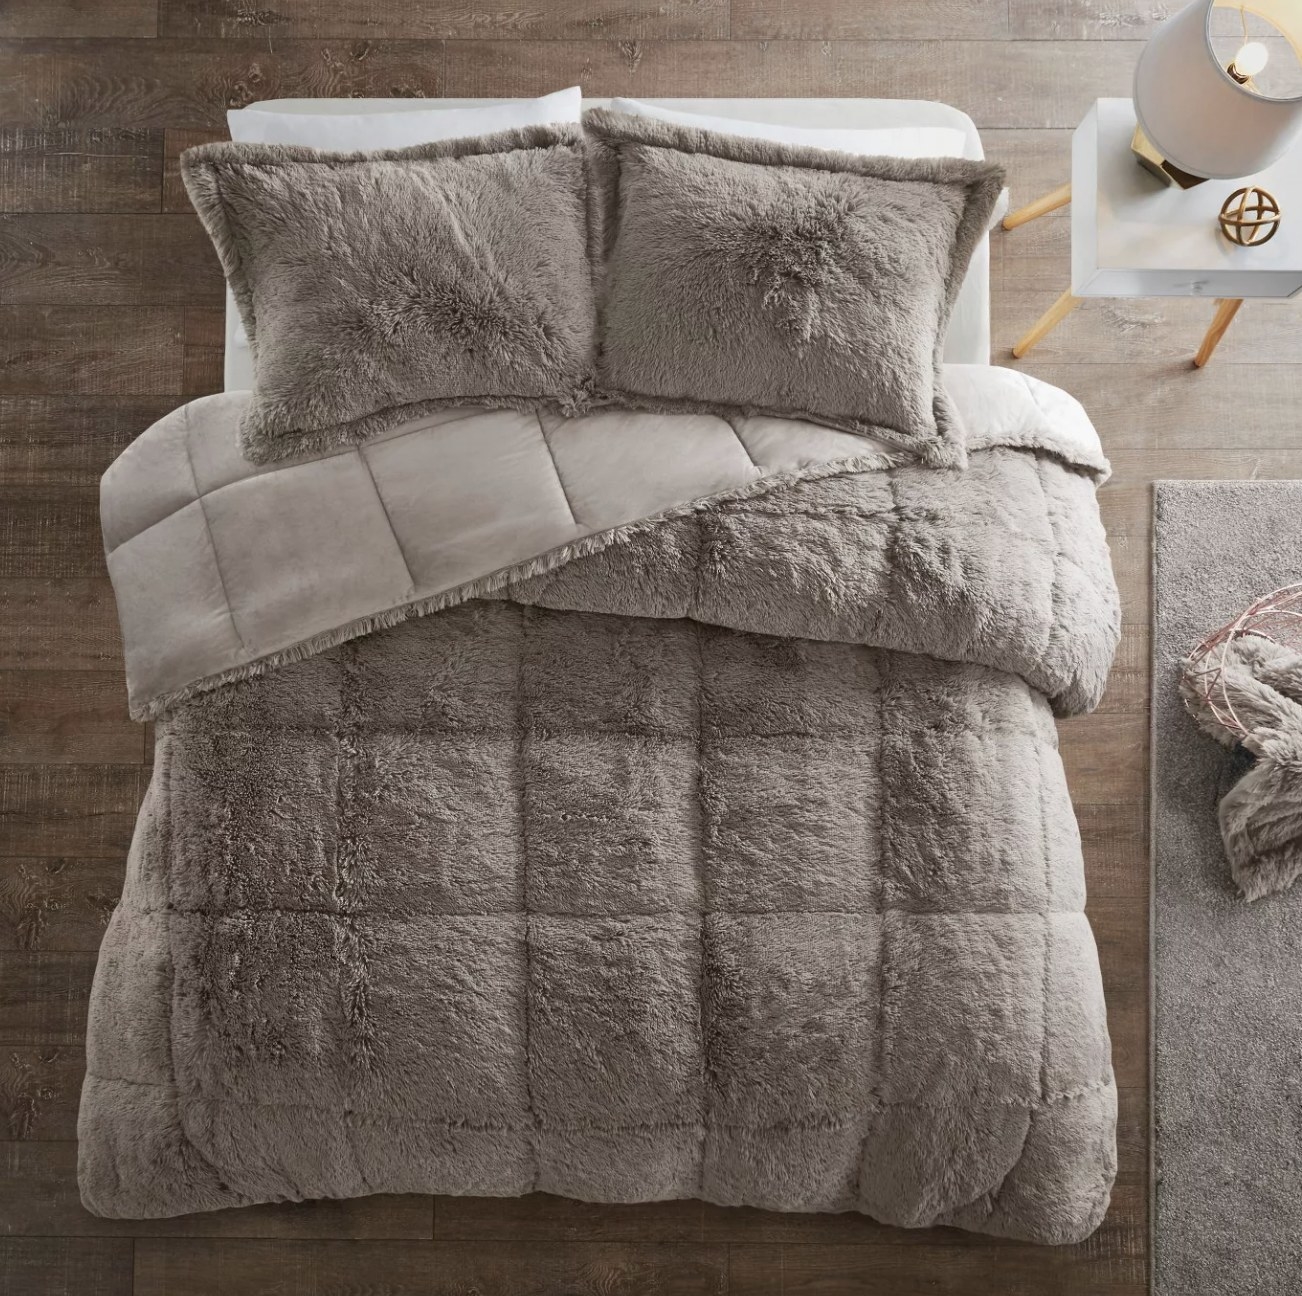 The brown comforter